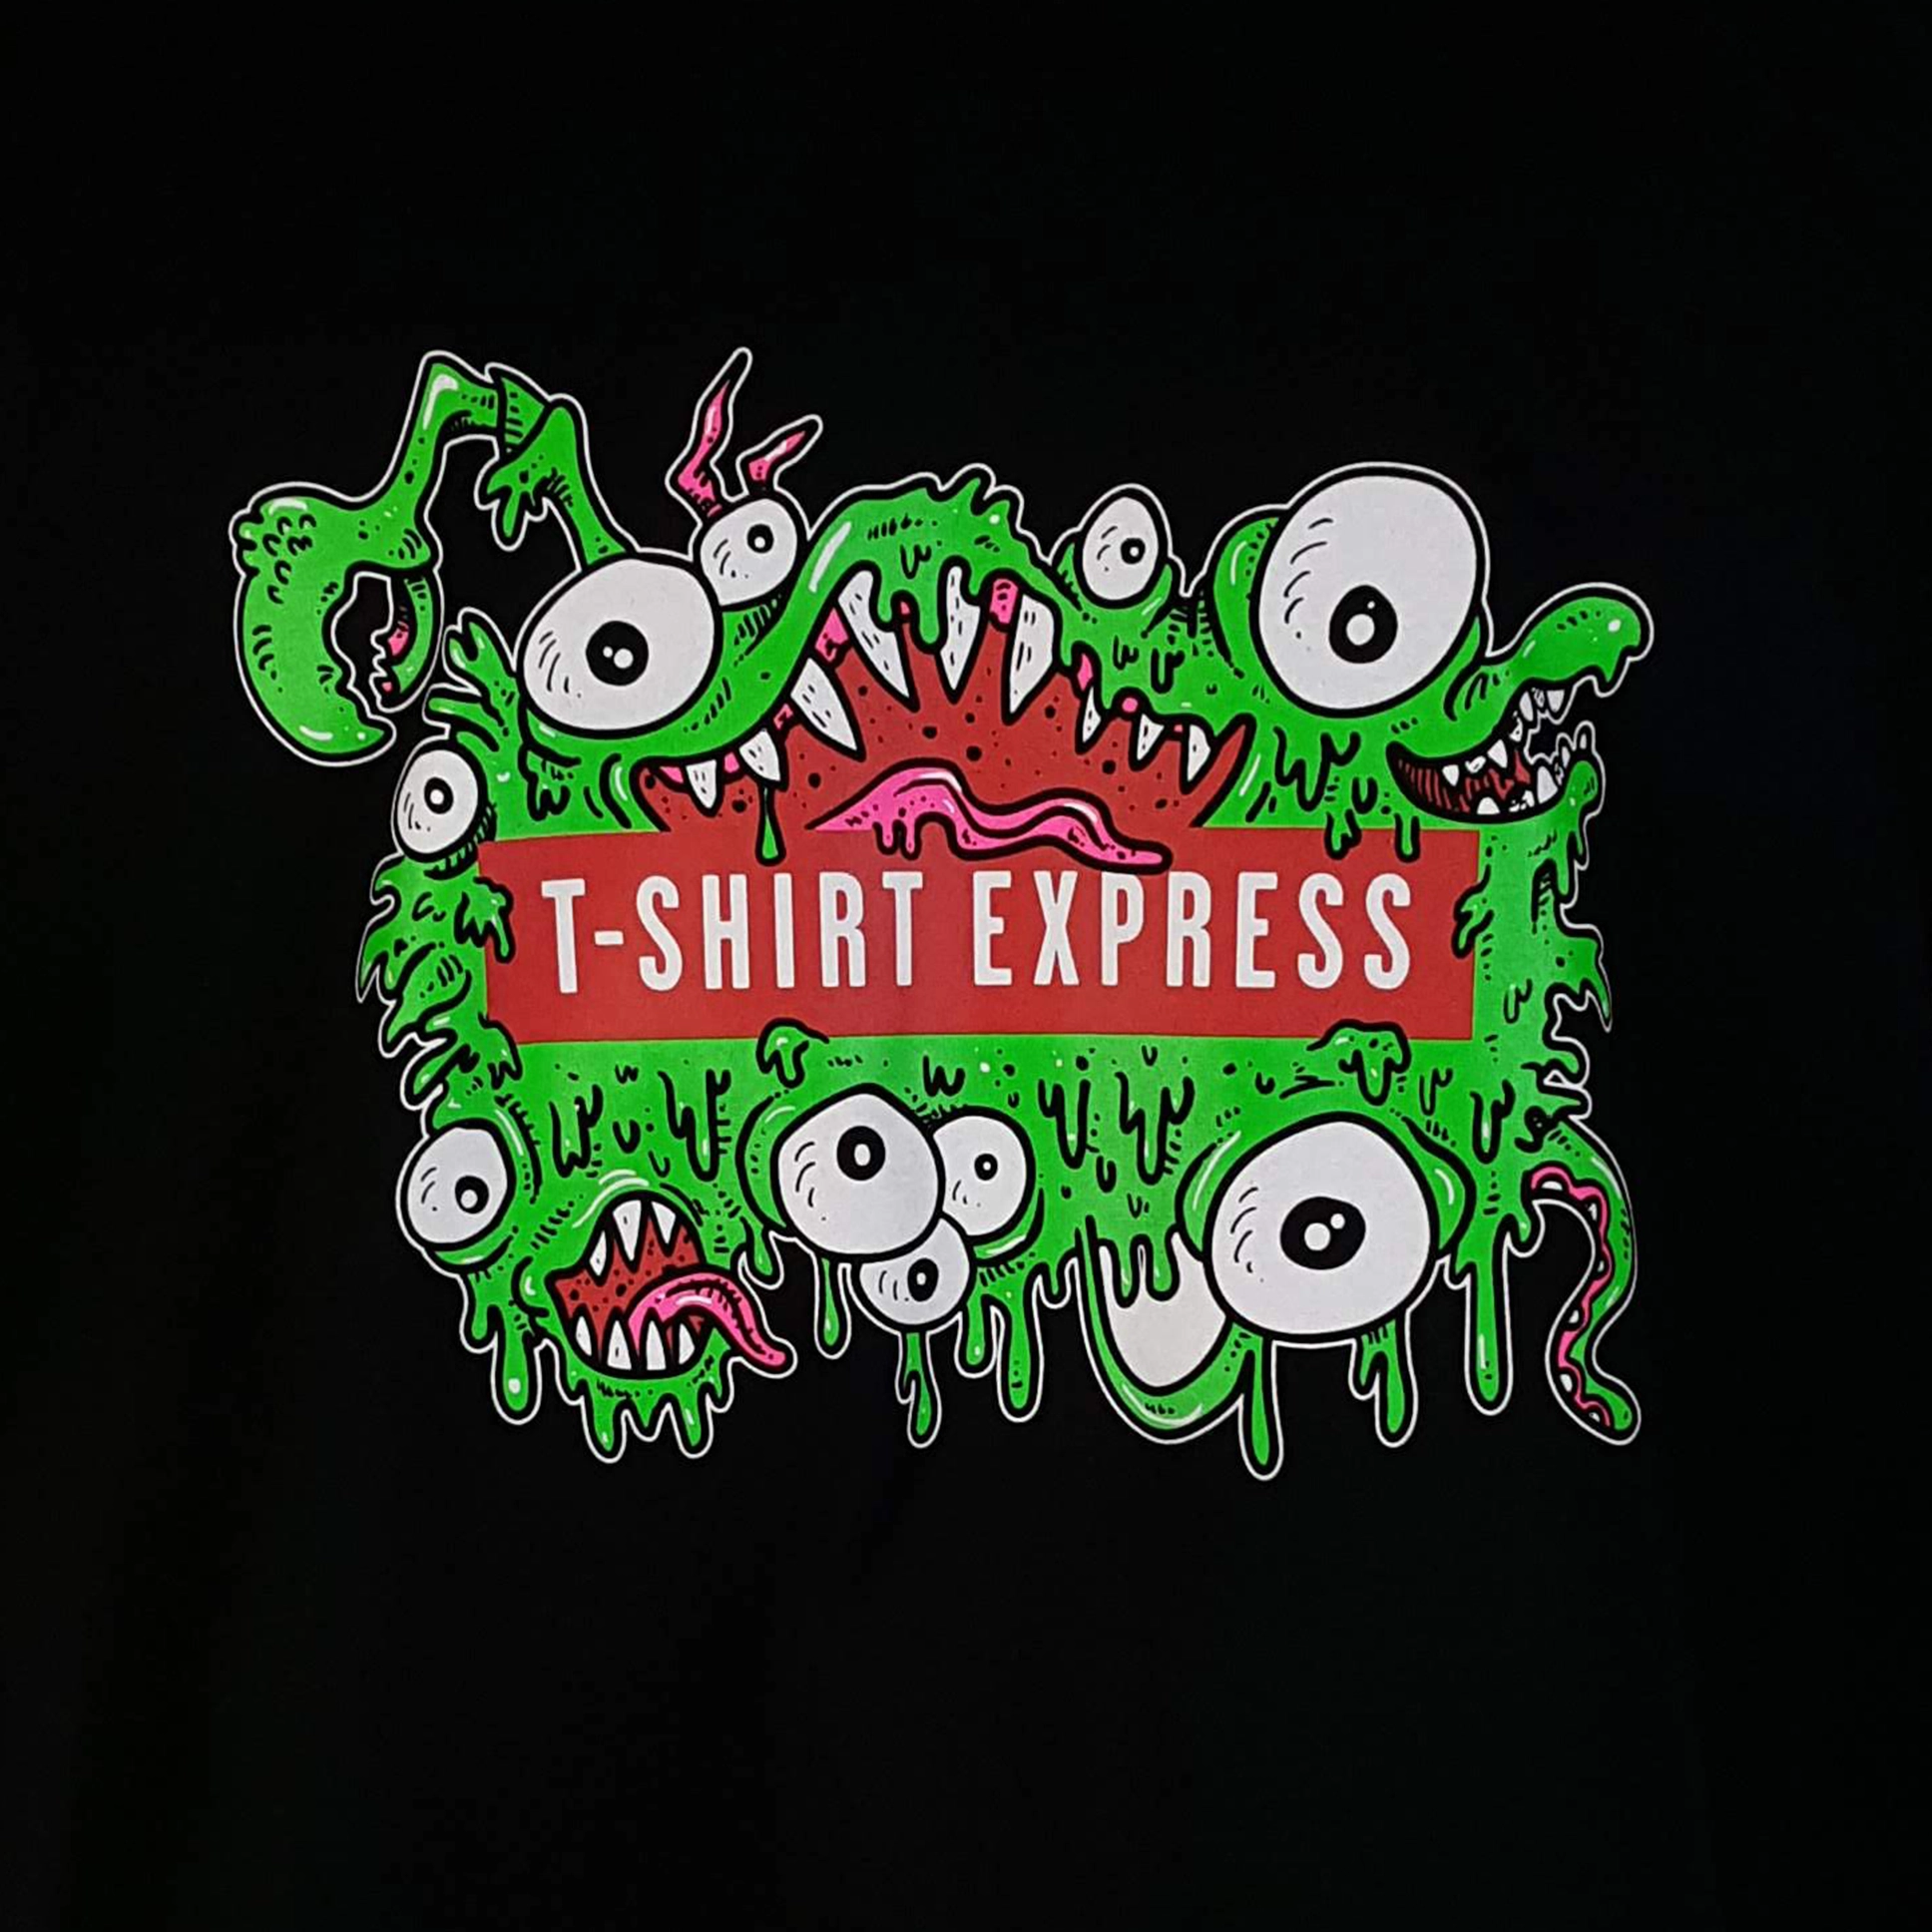 t-shirt express in Five Corners ohio